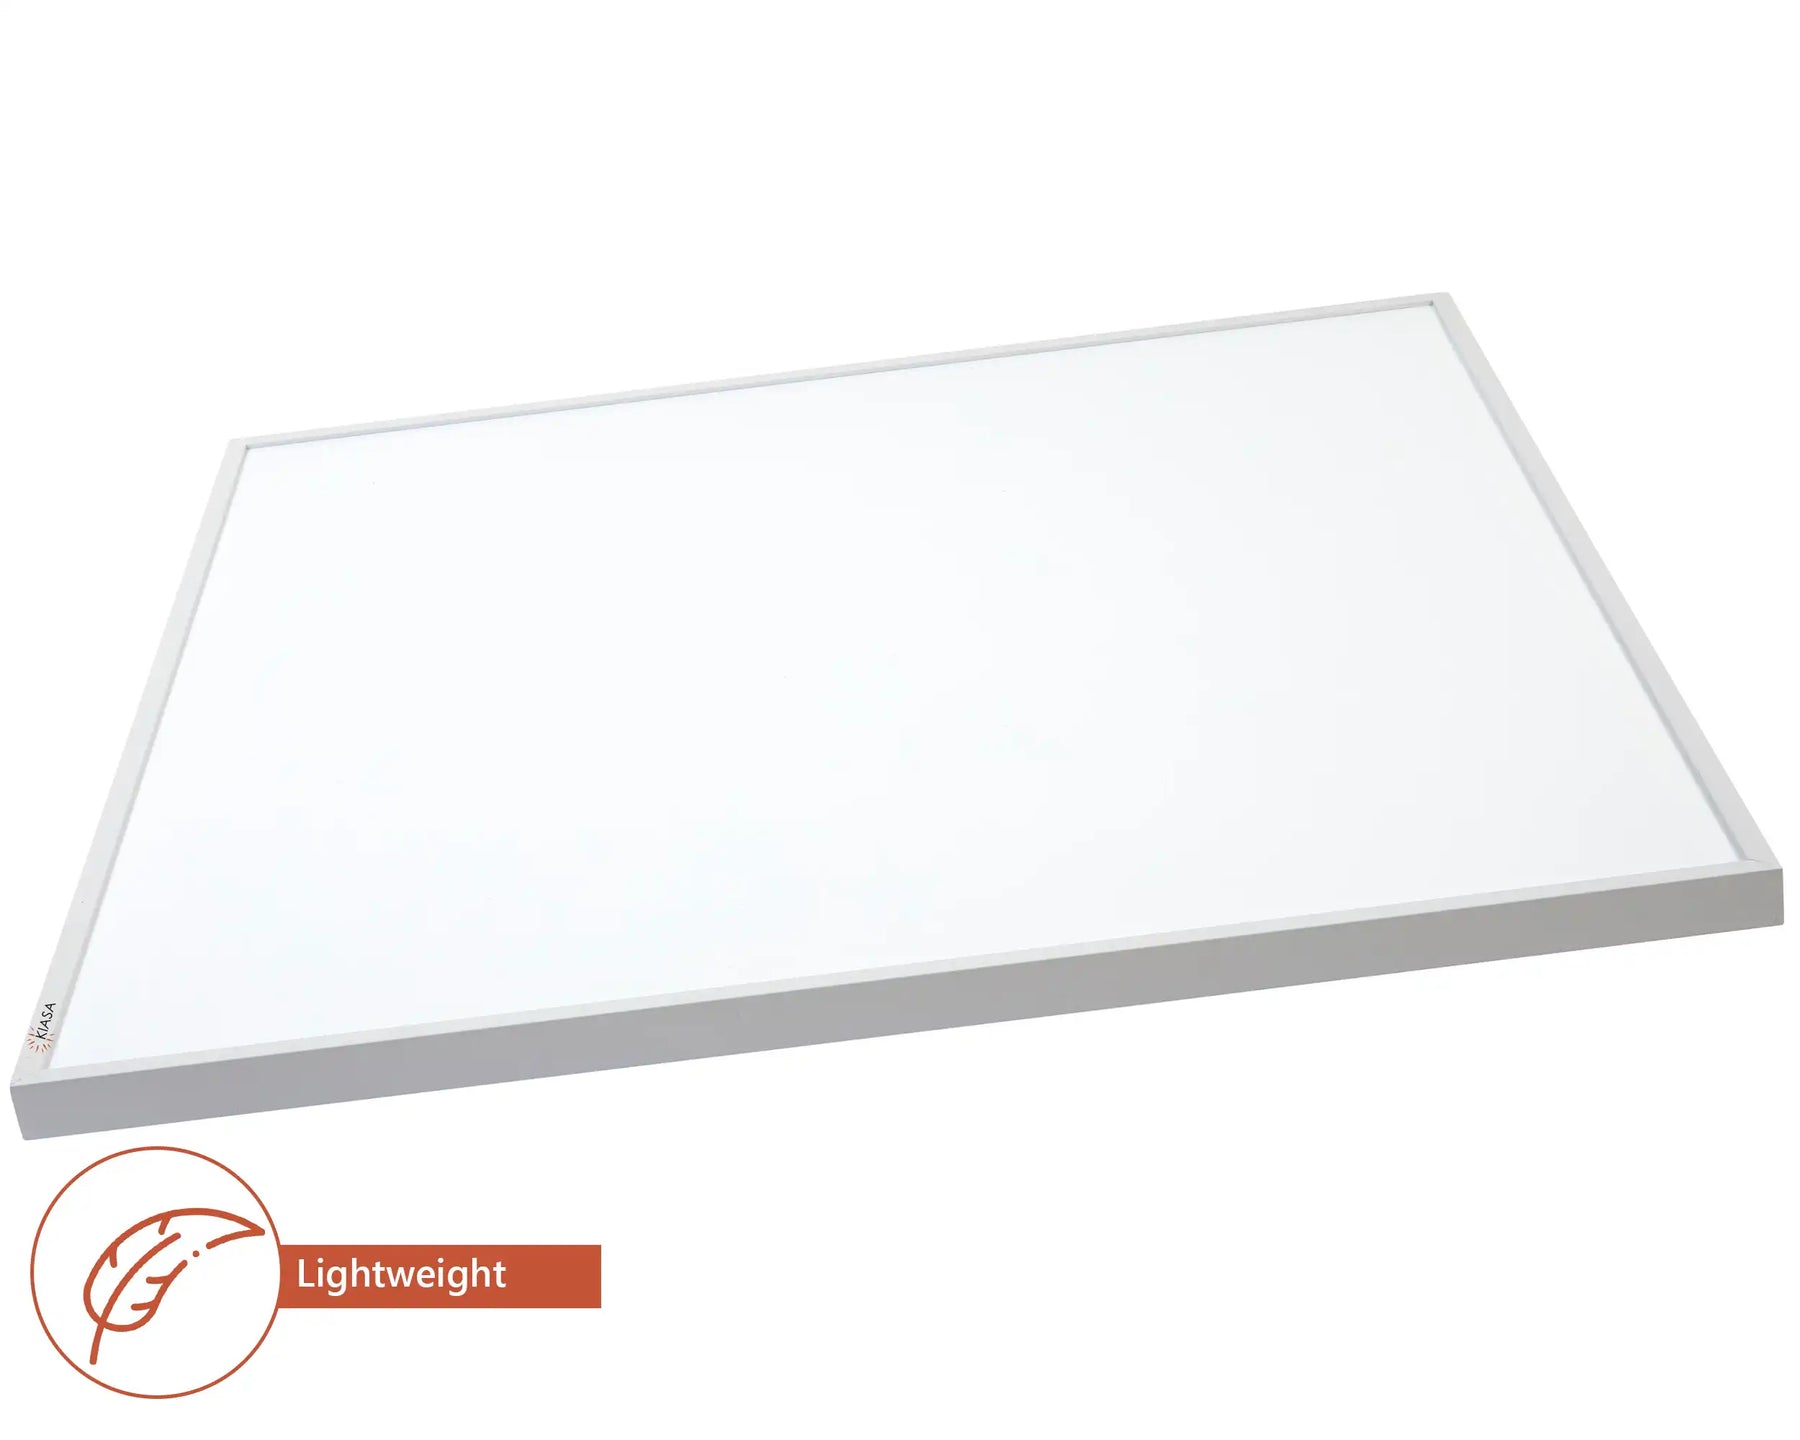 Kiasa 600w Infrared Panel - 100cm x 60cm - Tilted Panel - Lightweight IR Panel